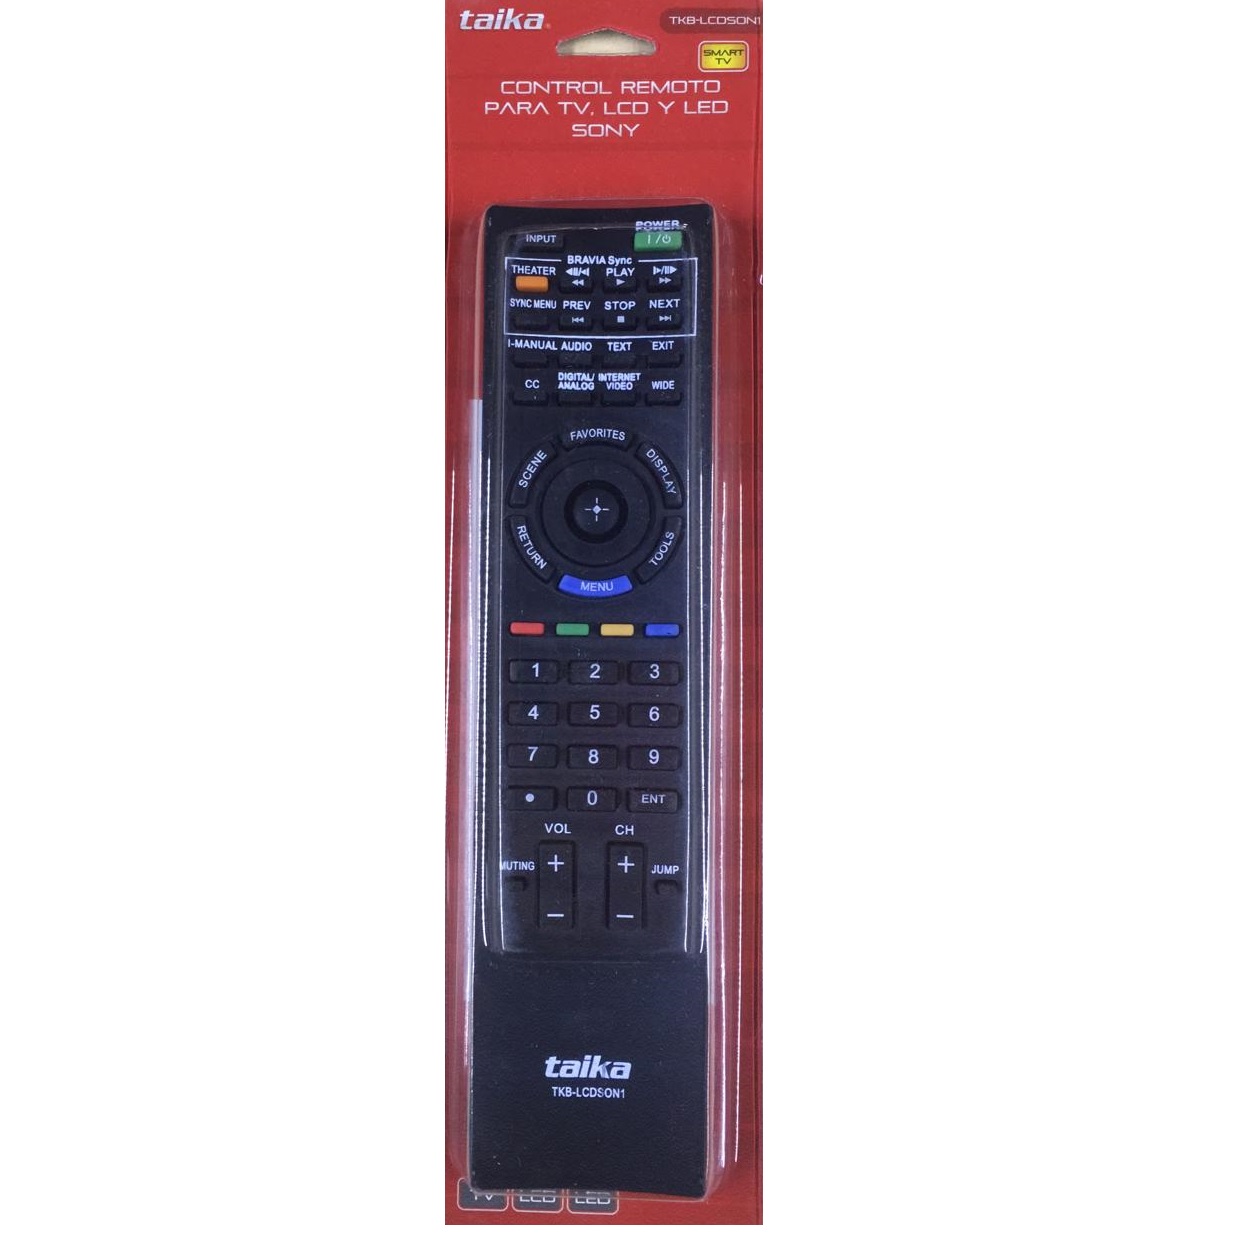 Control remoto p/TV Sony LCD/LED Taika (TKB-LCDSON1)